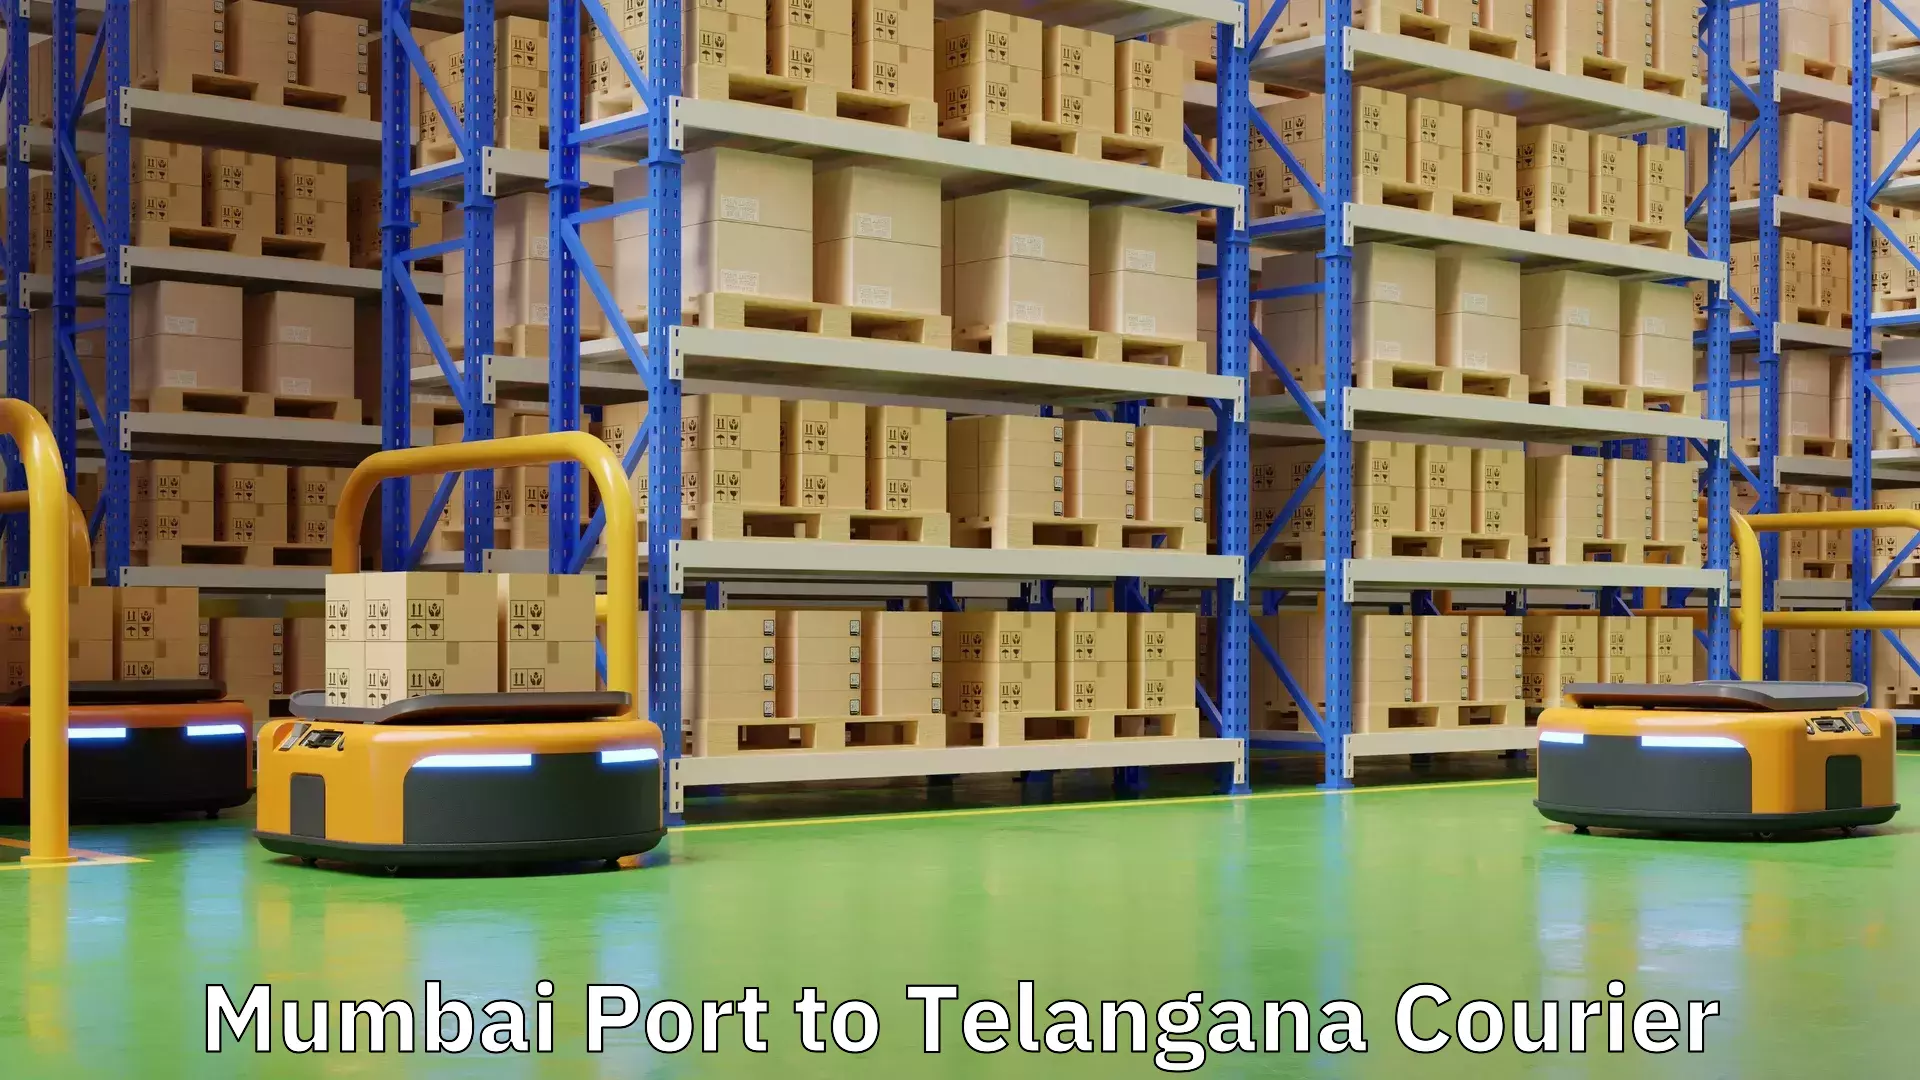 Nationwide courier service Mumbai Port to Telangana